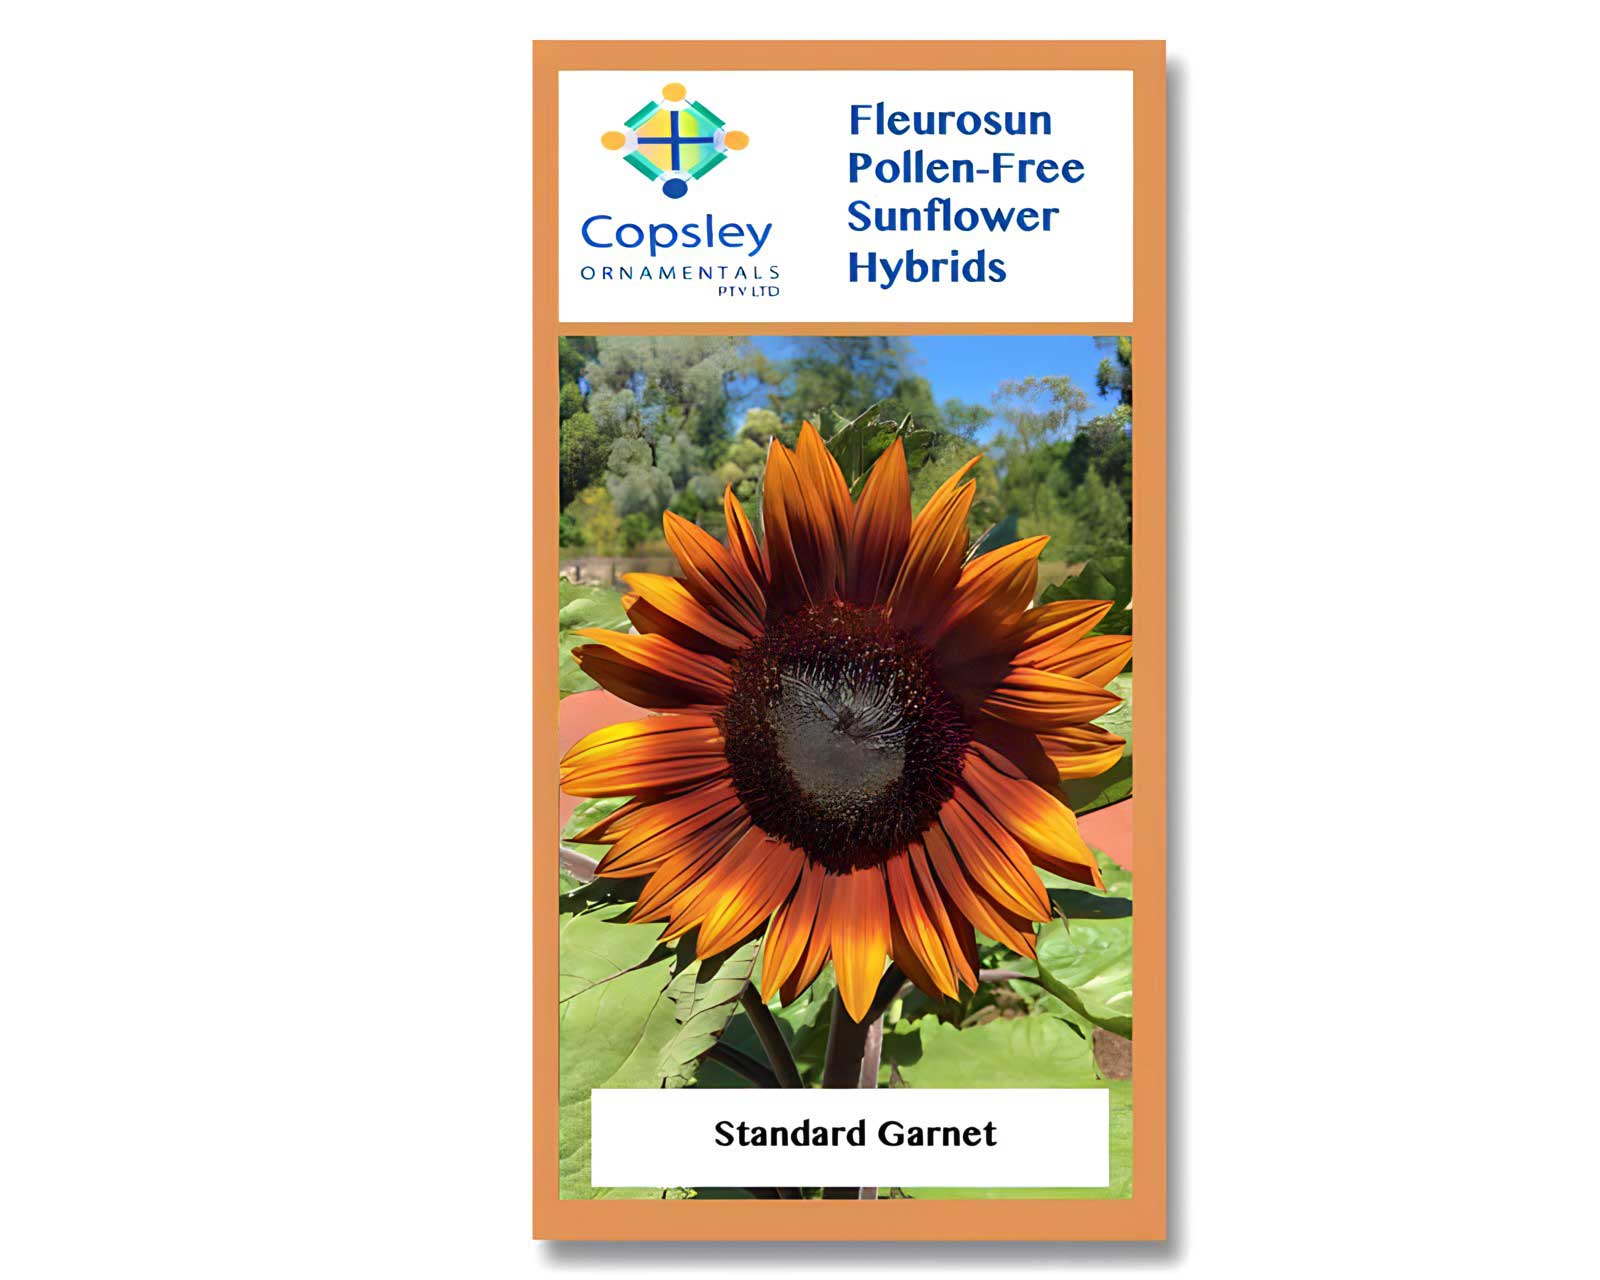 FleuroSun Standard Garnet by Copsley Ornamentals